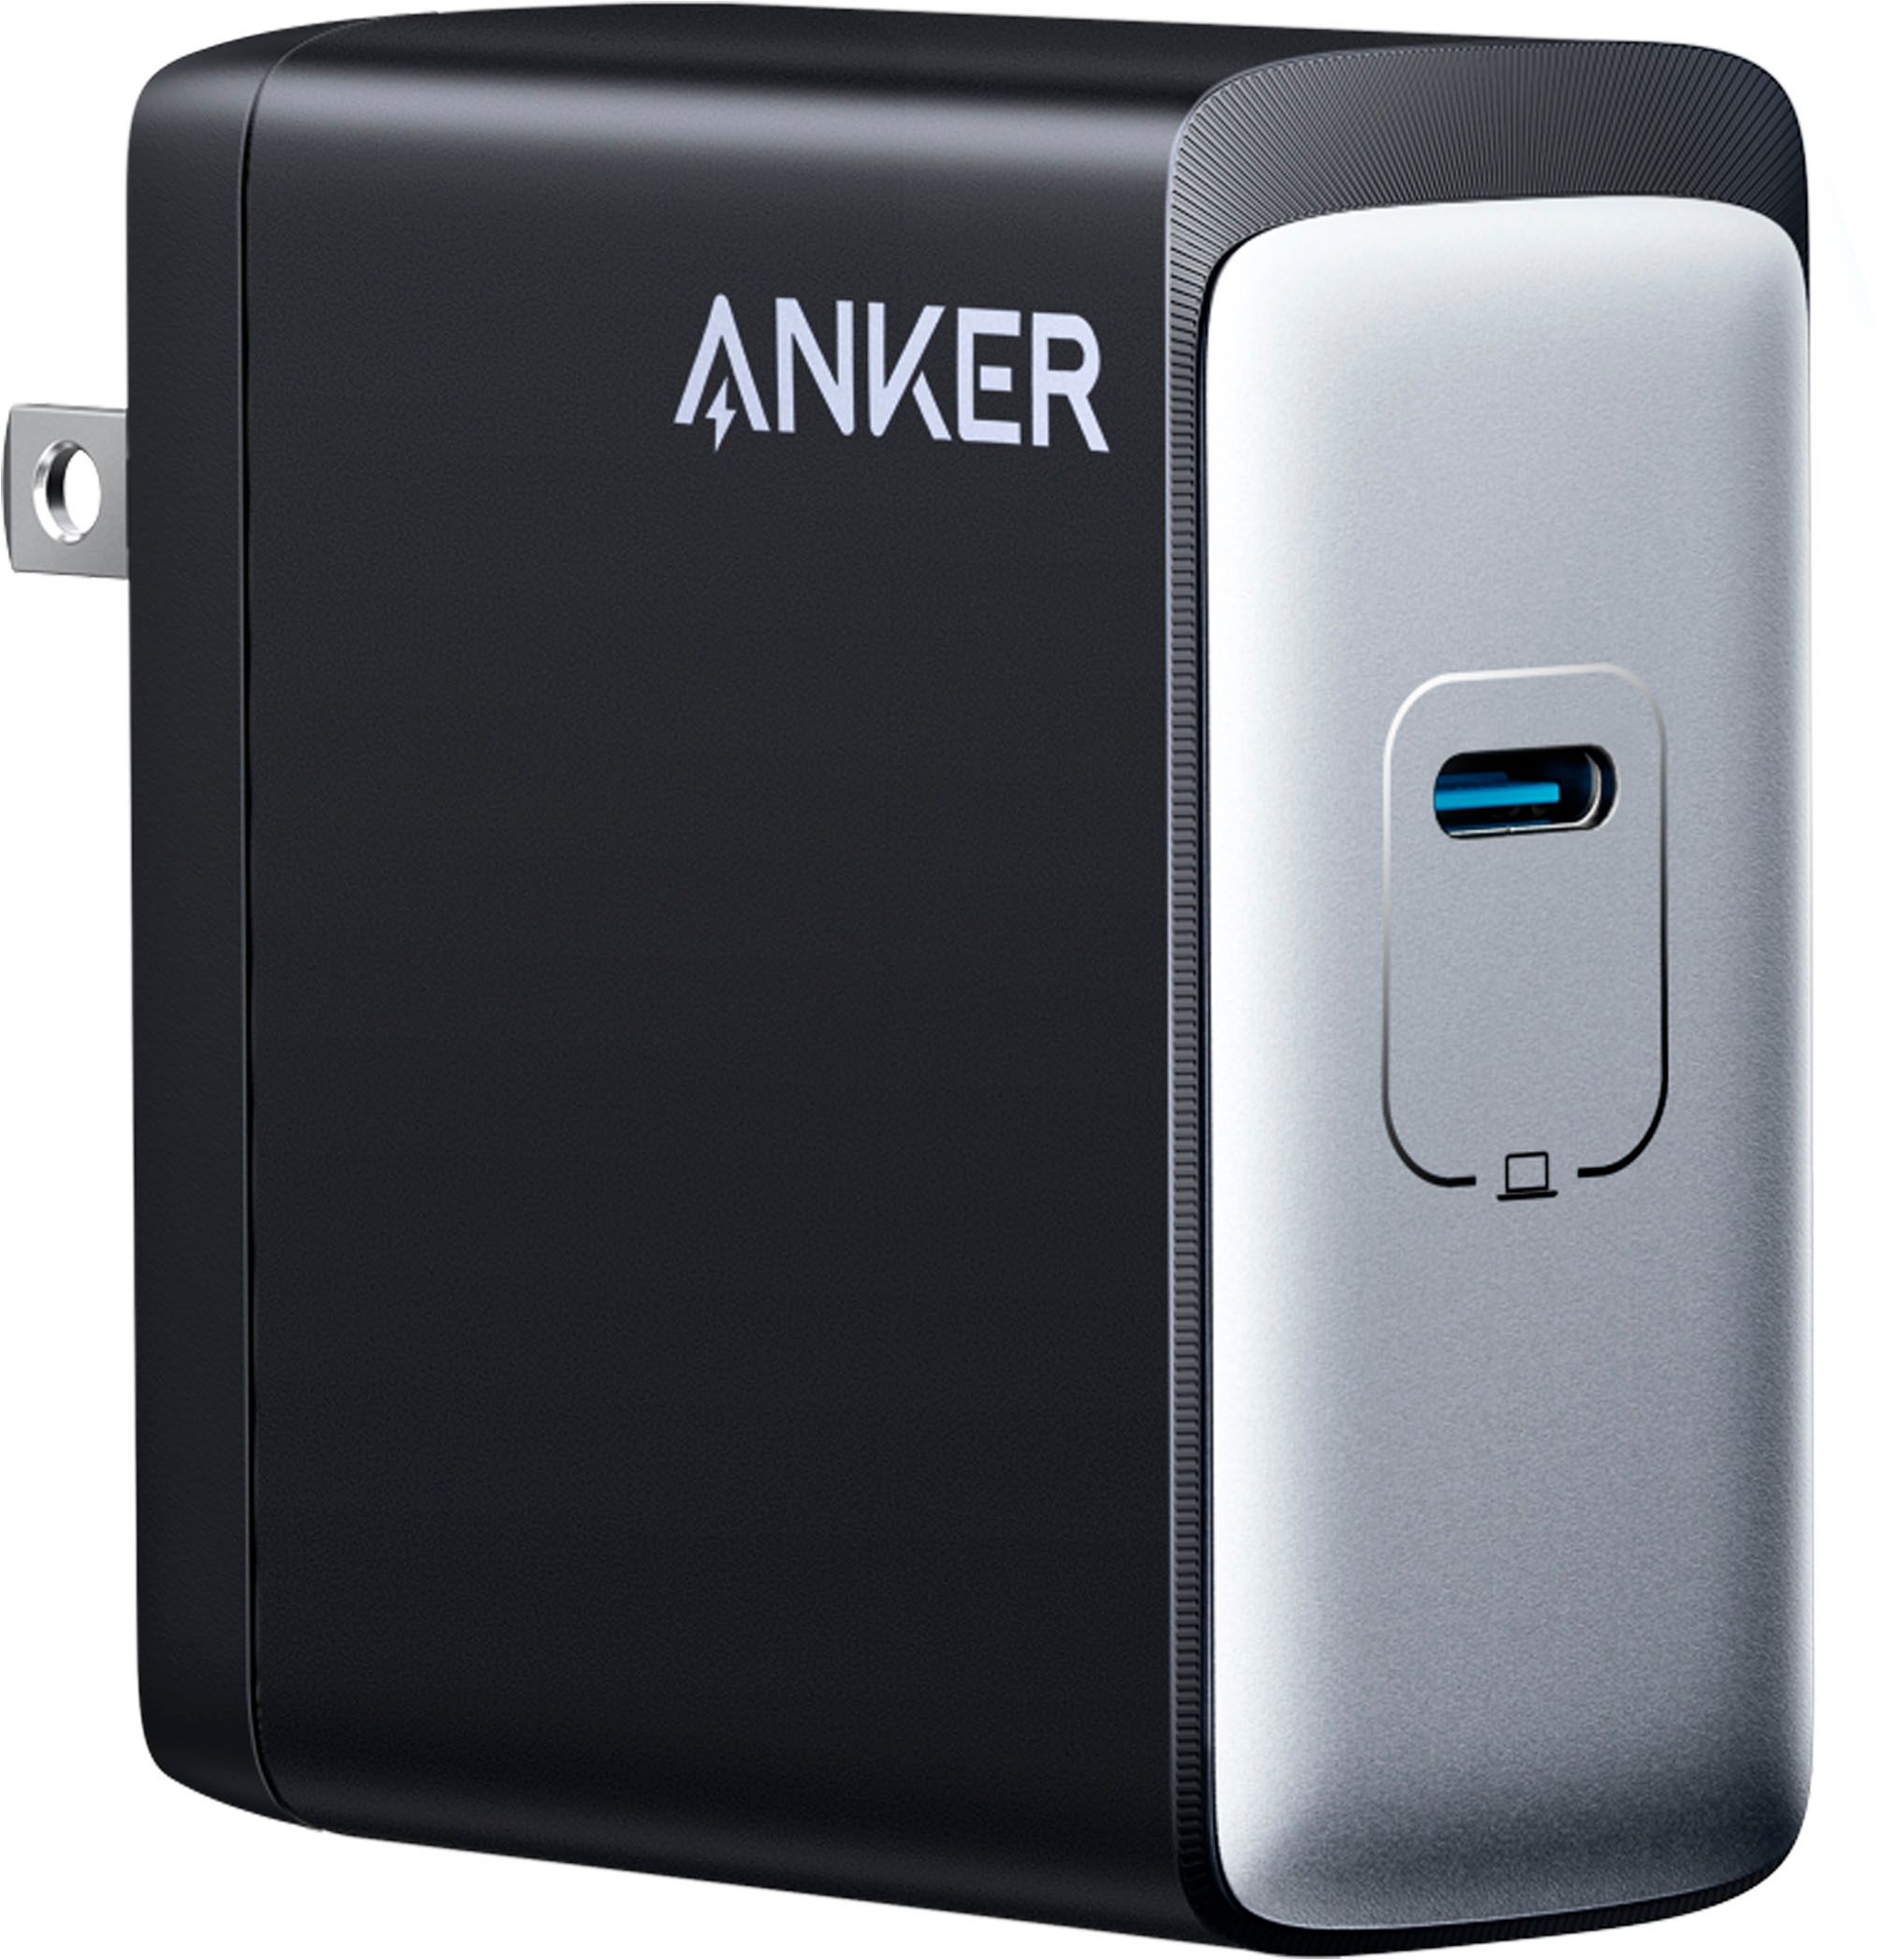 Anker Prime Charger (150W, 4-Port) Black A2340111 - Best Buy